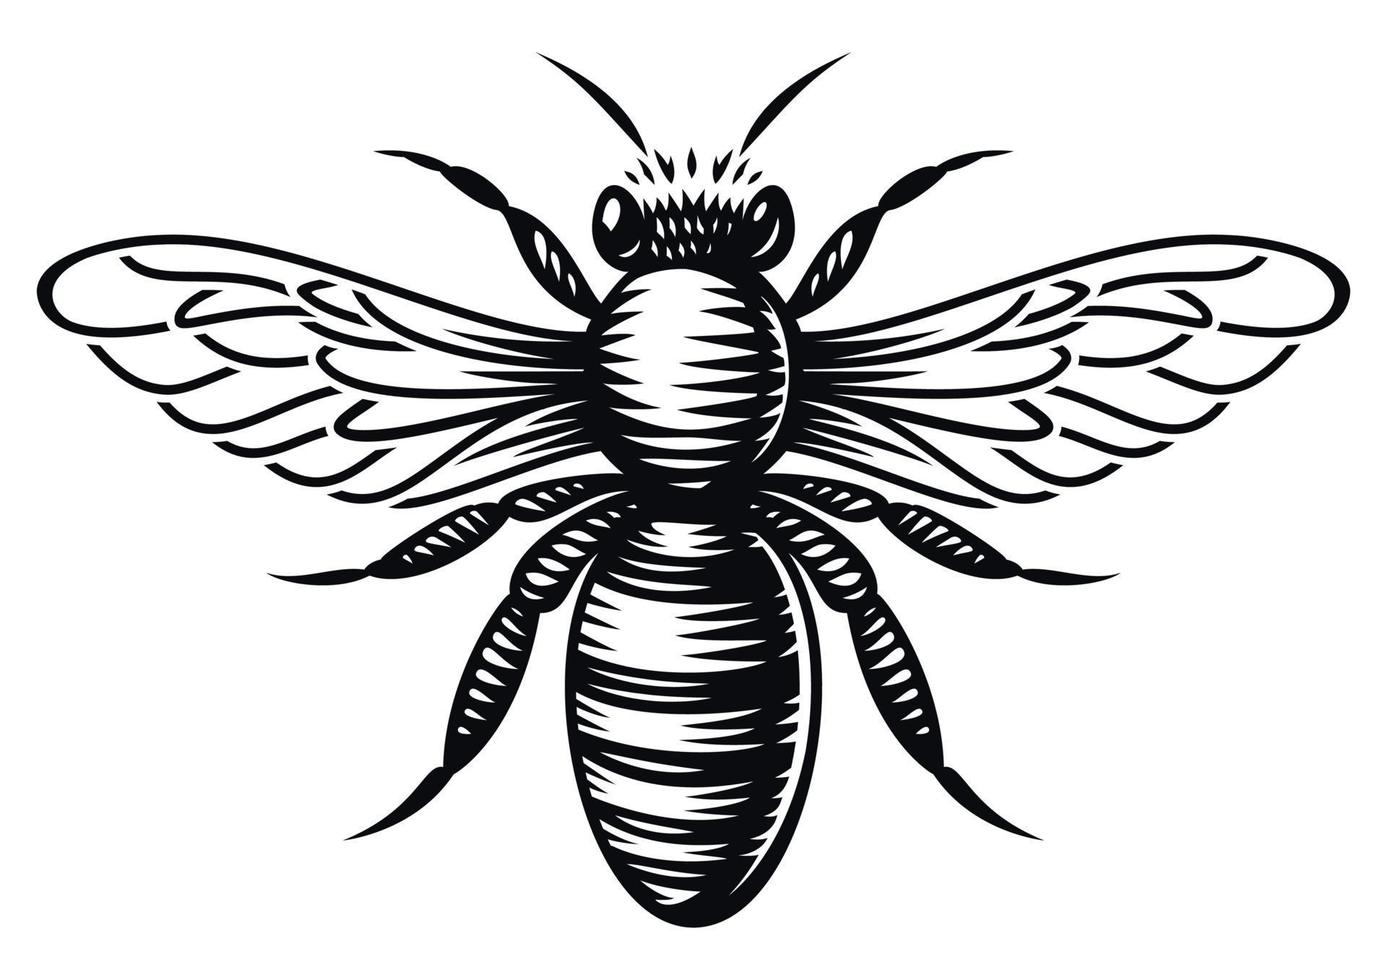 Abelha de mel de vetor preto e branco em estilo de gravura em fundo branco